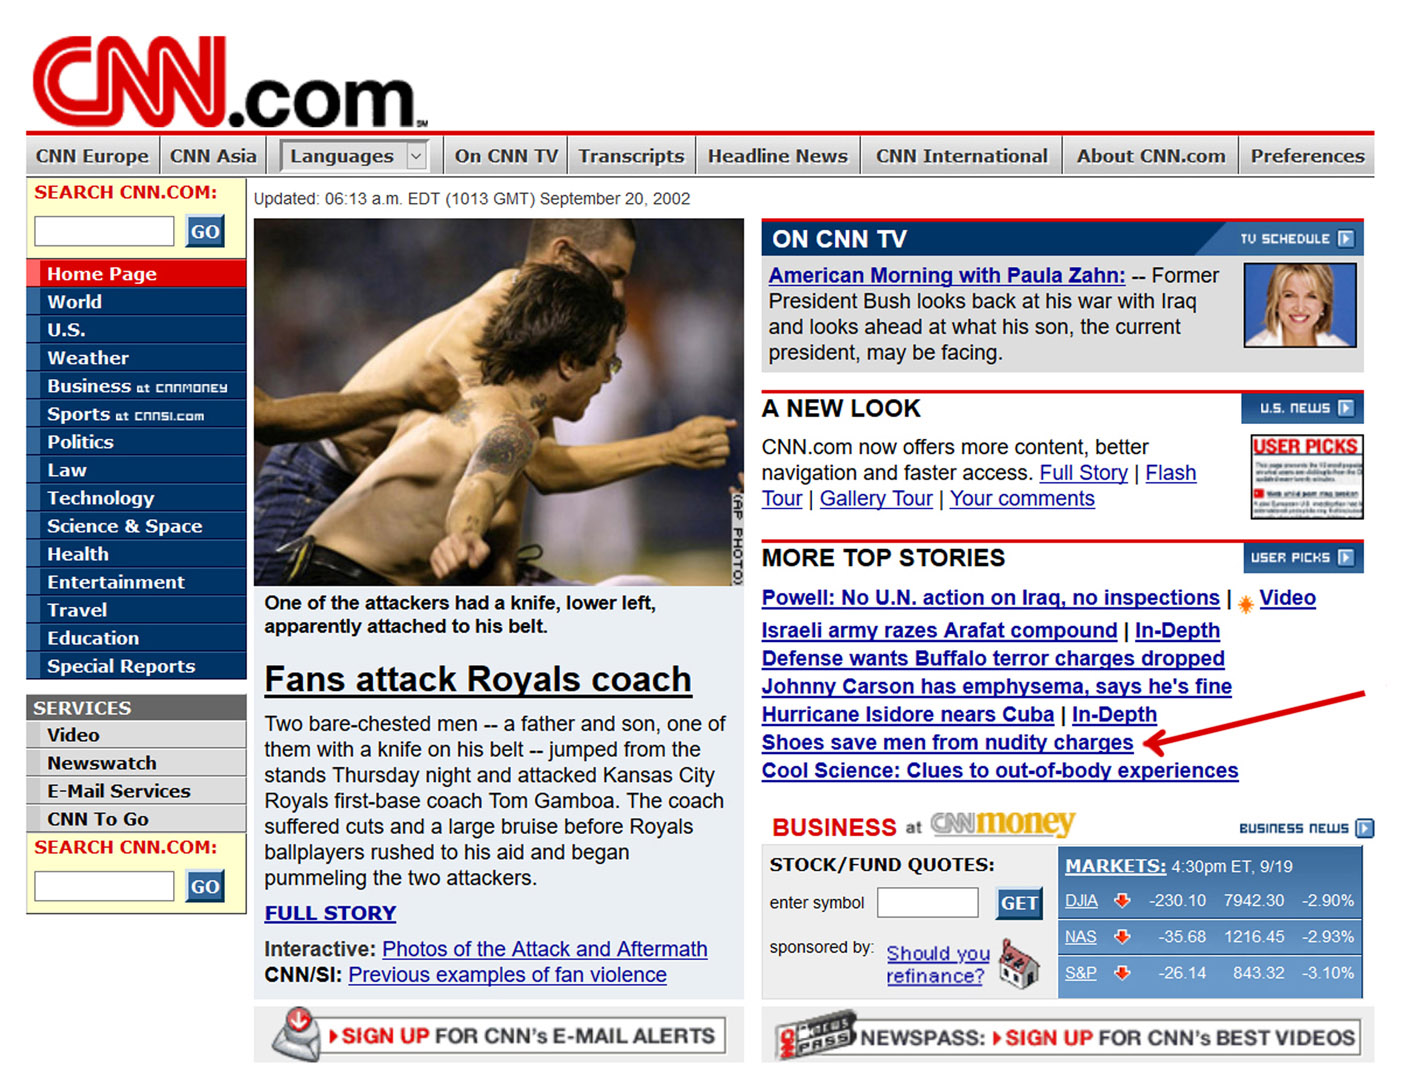 CNN.com 2002-09-20 - Simm convinces prosecutors to drop nudity charges against Pride marchers pt1